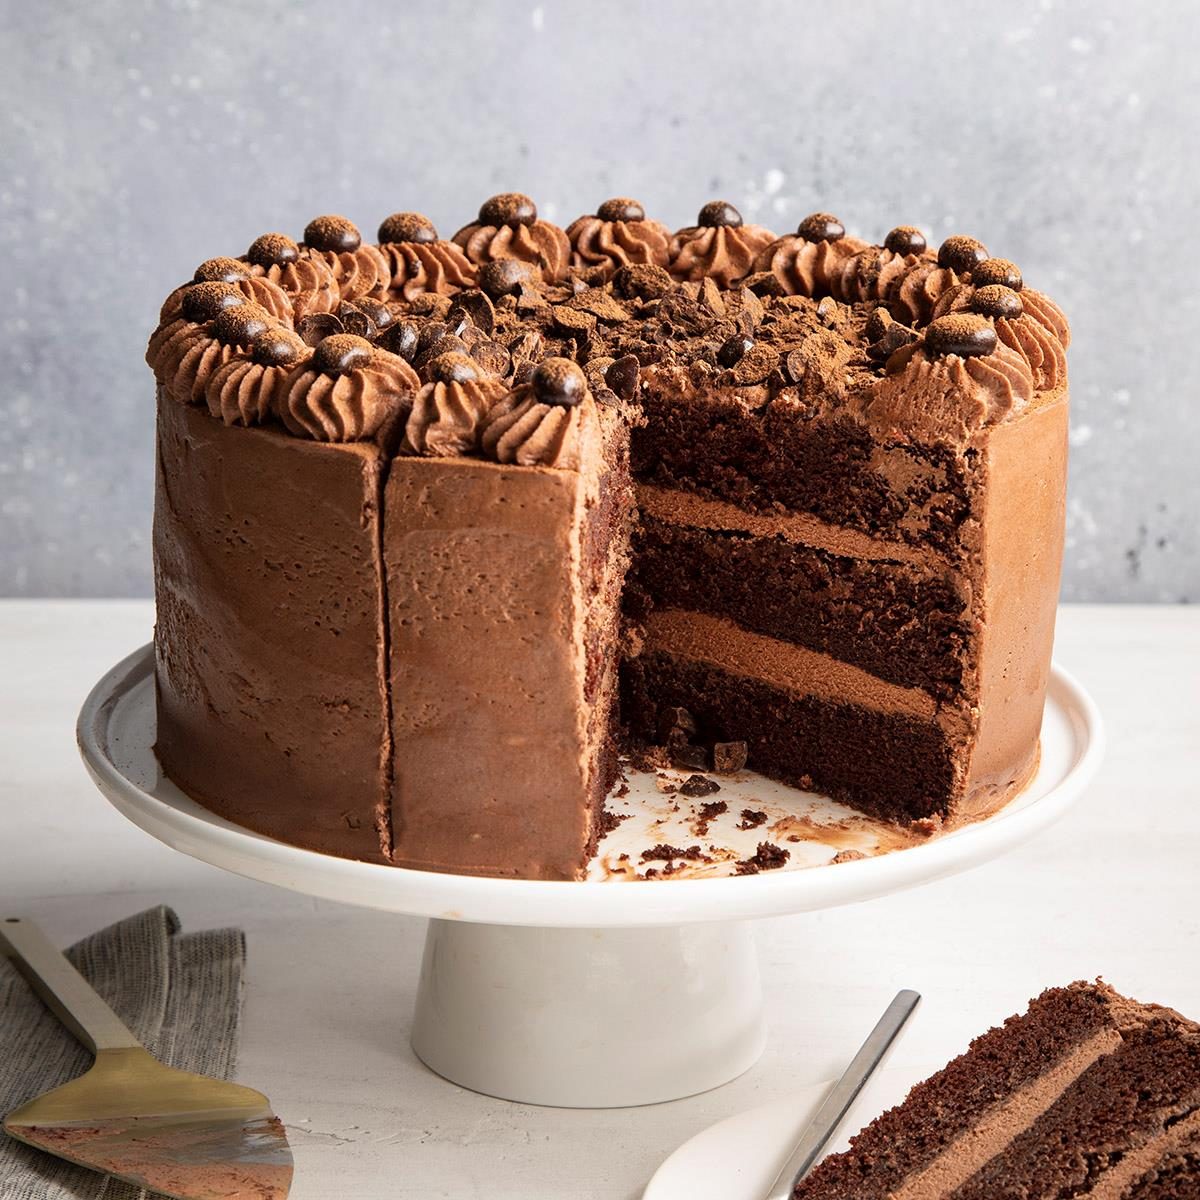 Mocha Cake Recipe: How to Make It